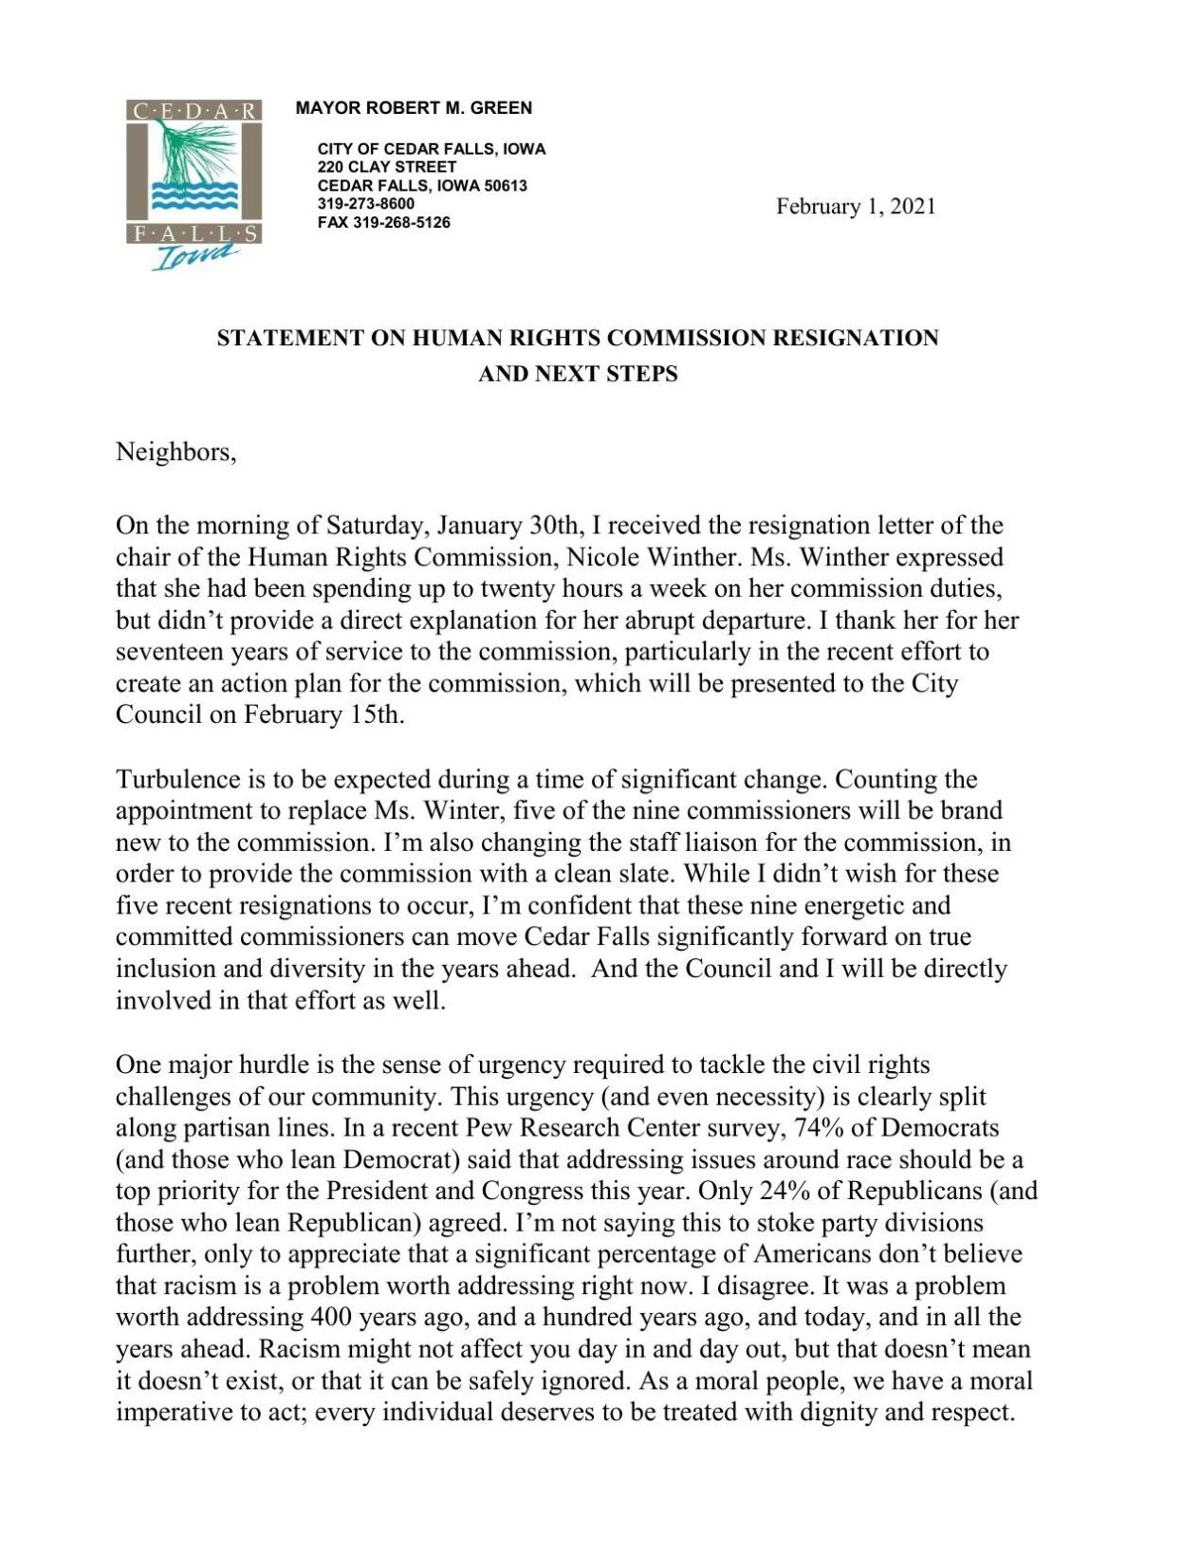 READ: Mayor Green statement on Nicole Winther resignation